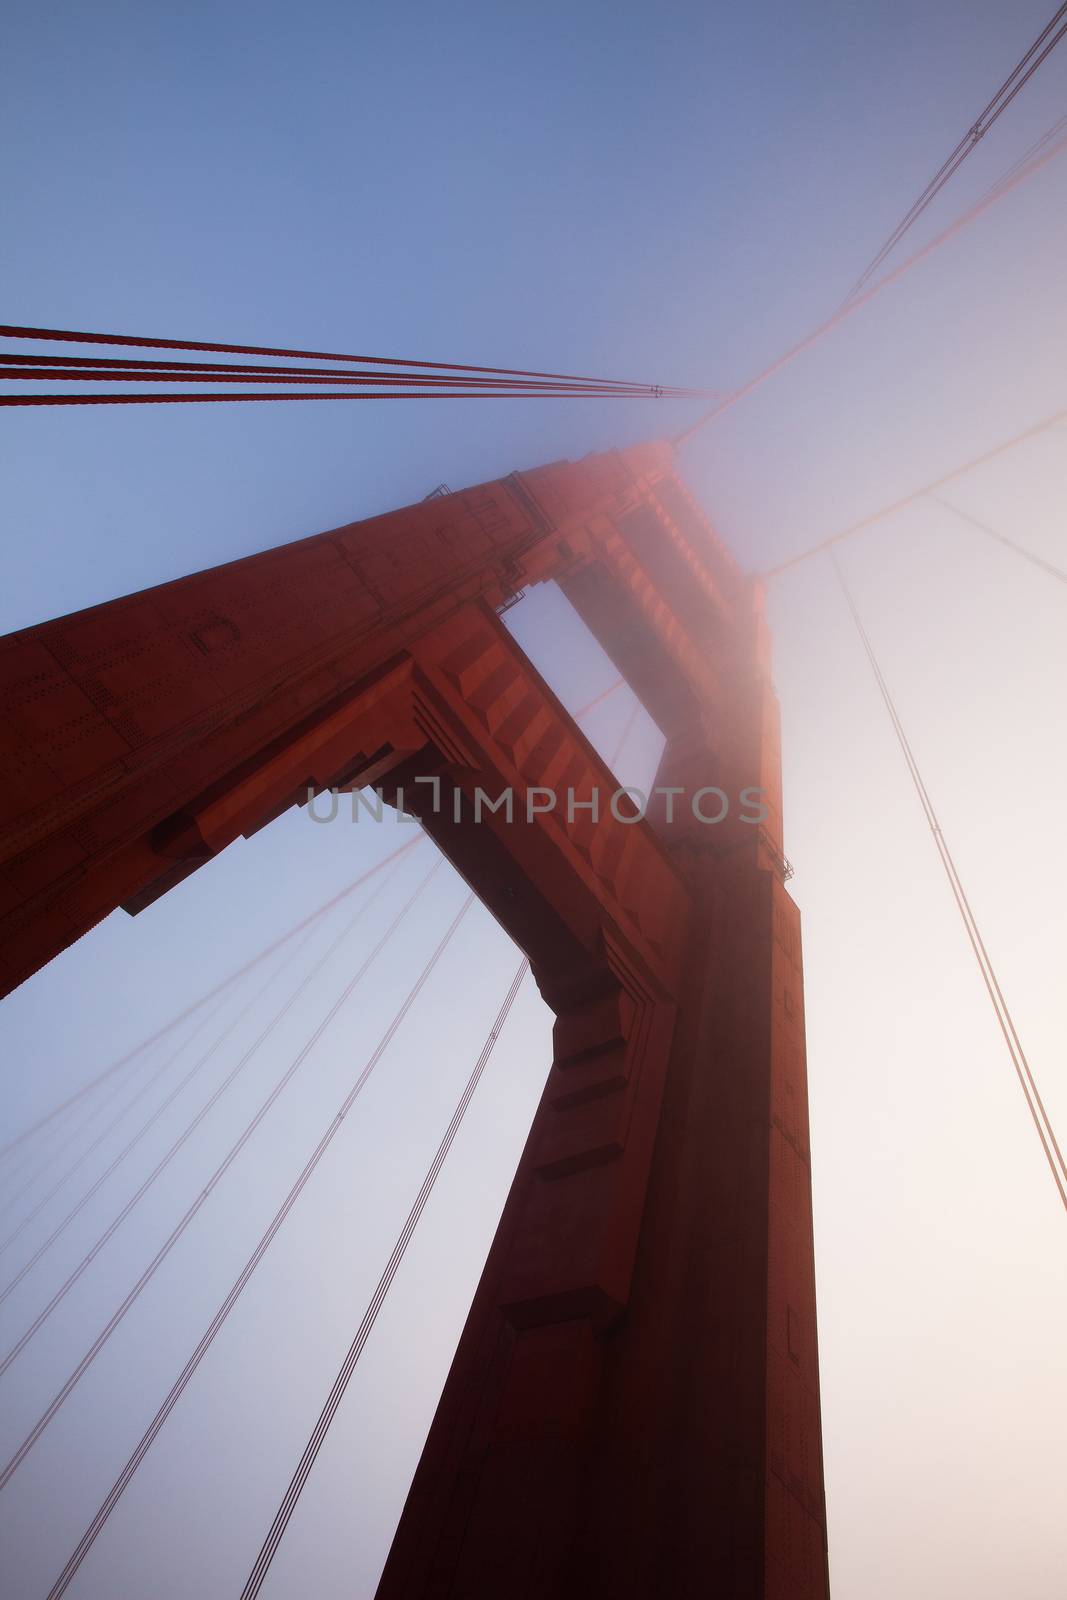 The famous Golden Gate Bridge in San Francisco in the fog